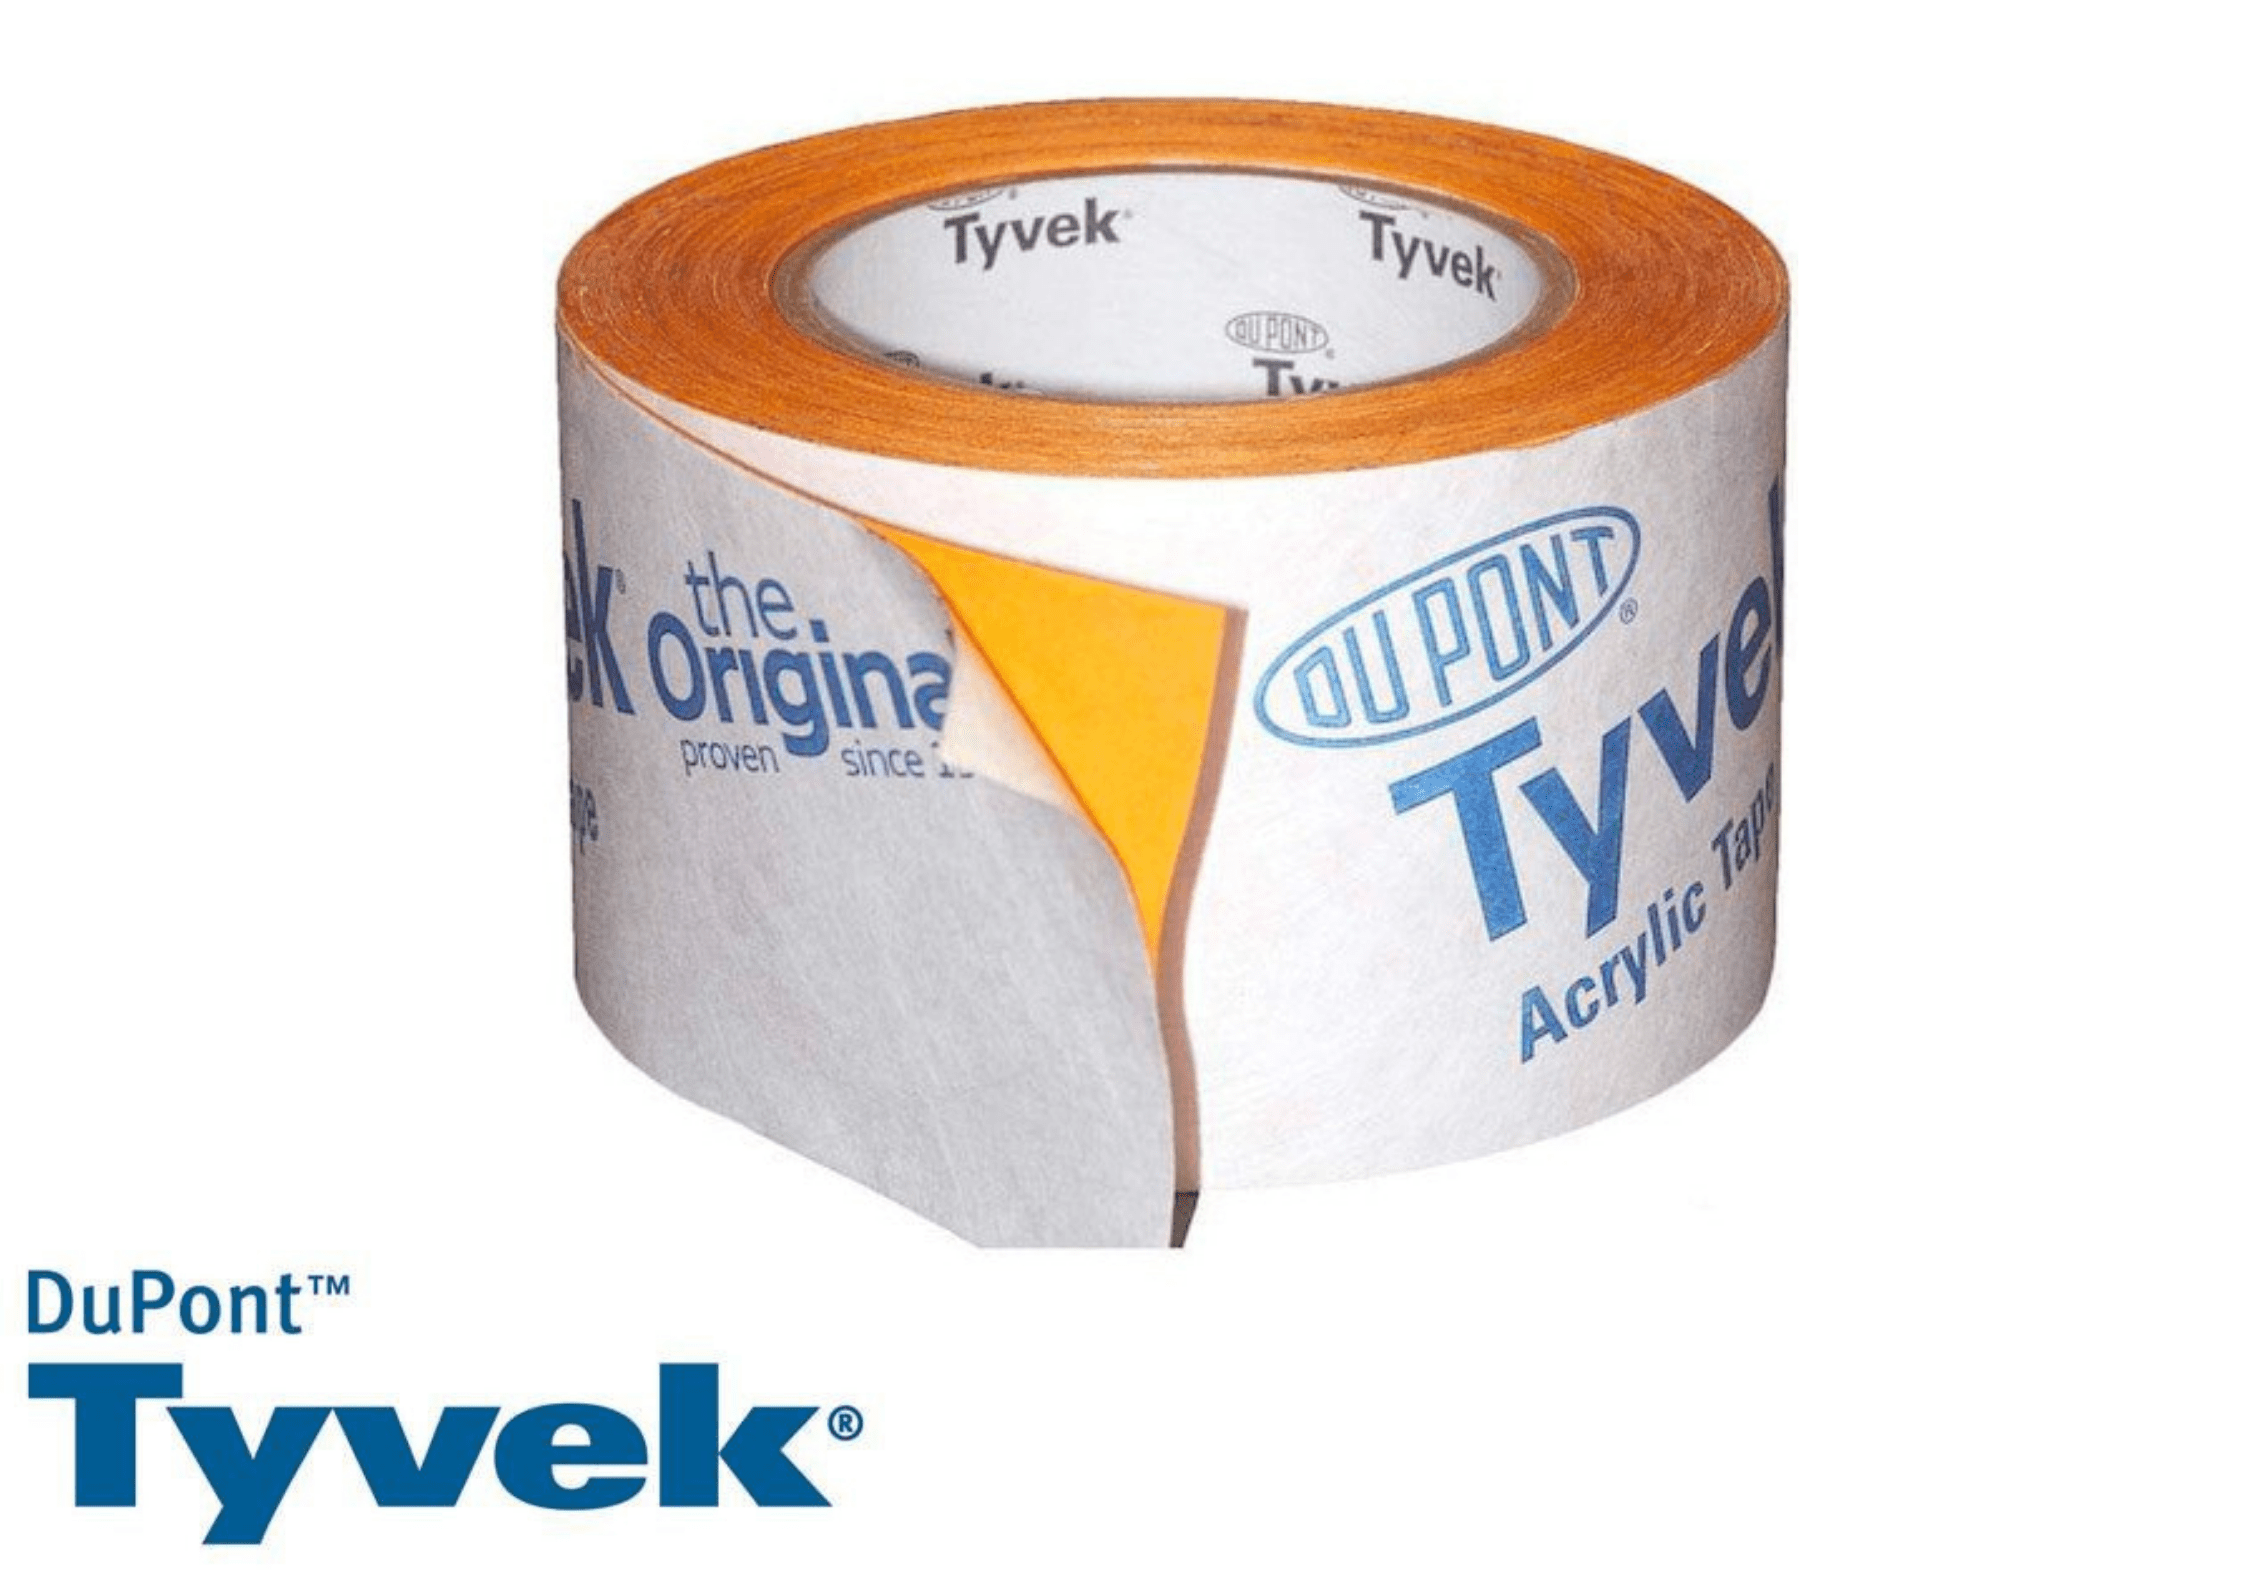 InsulationUK.co.uk Tyvek Tyvek Acrylic Single Sided Tape 75mm x 25m IUK01067 Tyvek Acrylic Single Sided Tape 75mm x 25m | insulationuk.co.uk